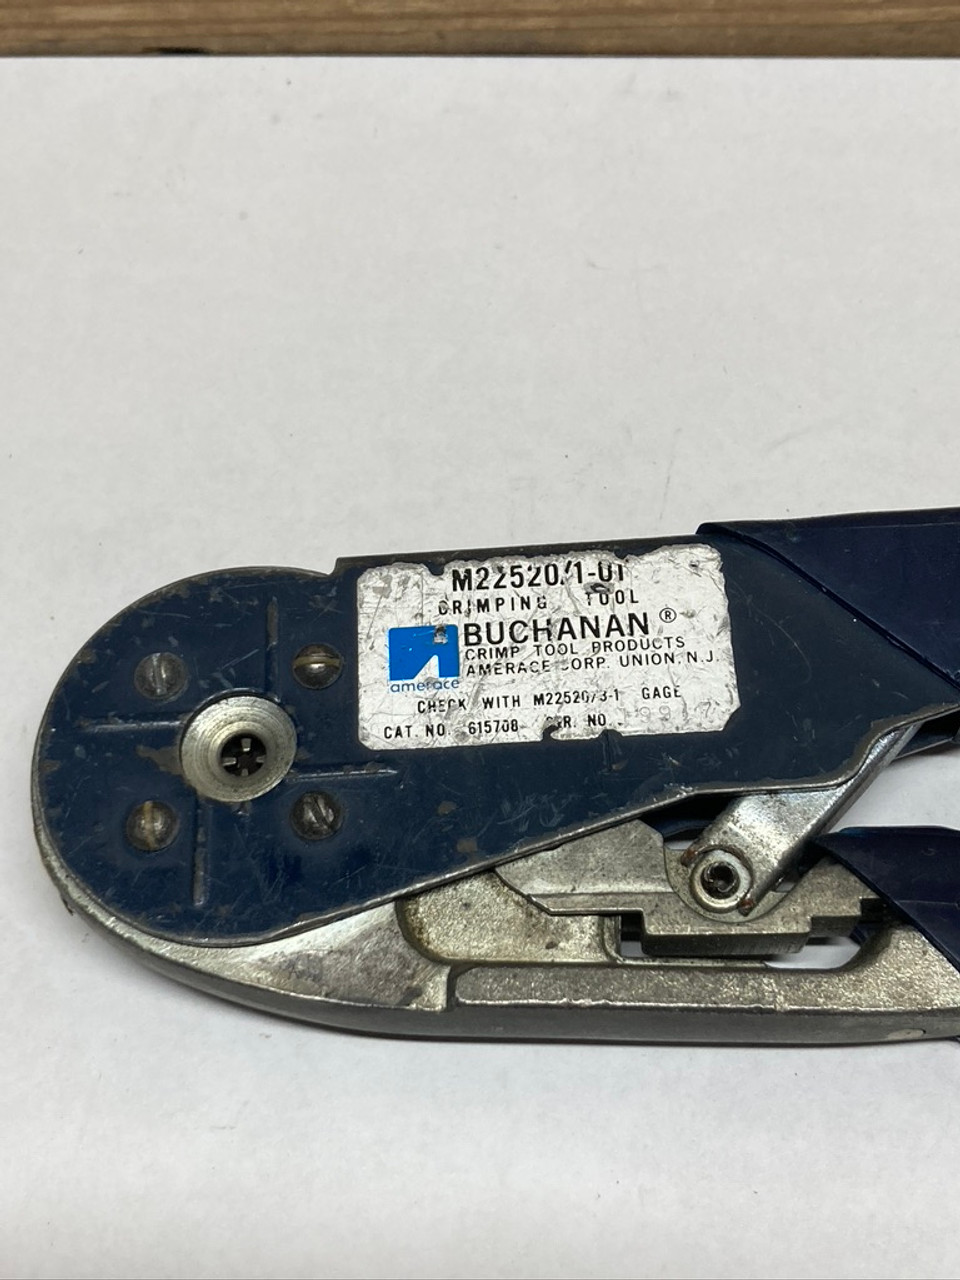 Hand Terminal Crimping Tool M22520/1-01 Buchanan